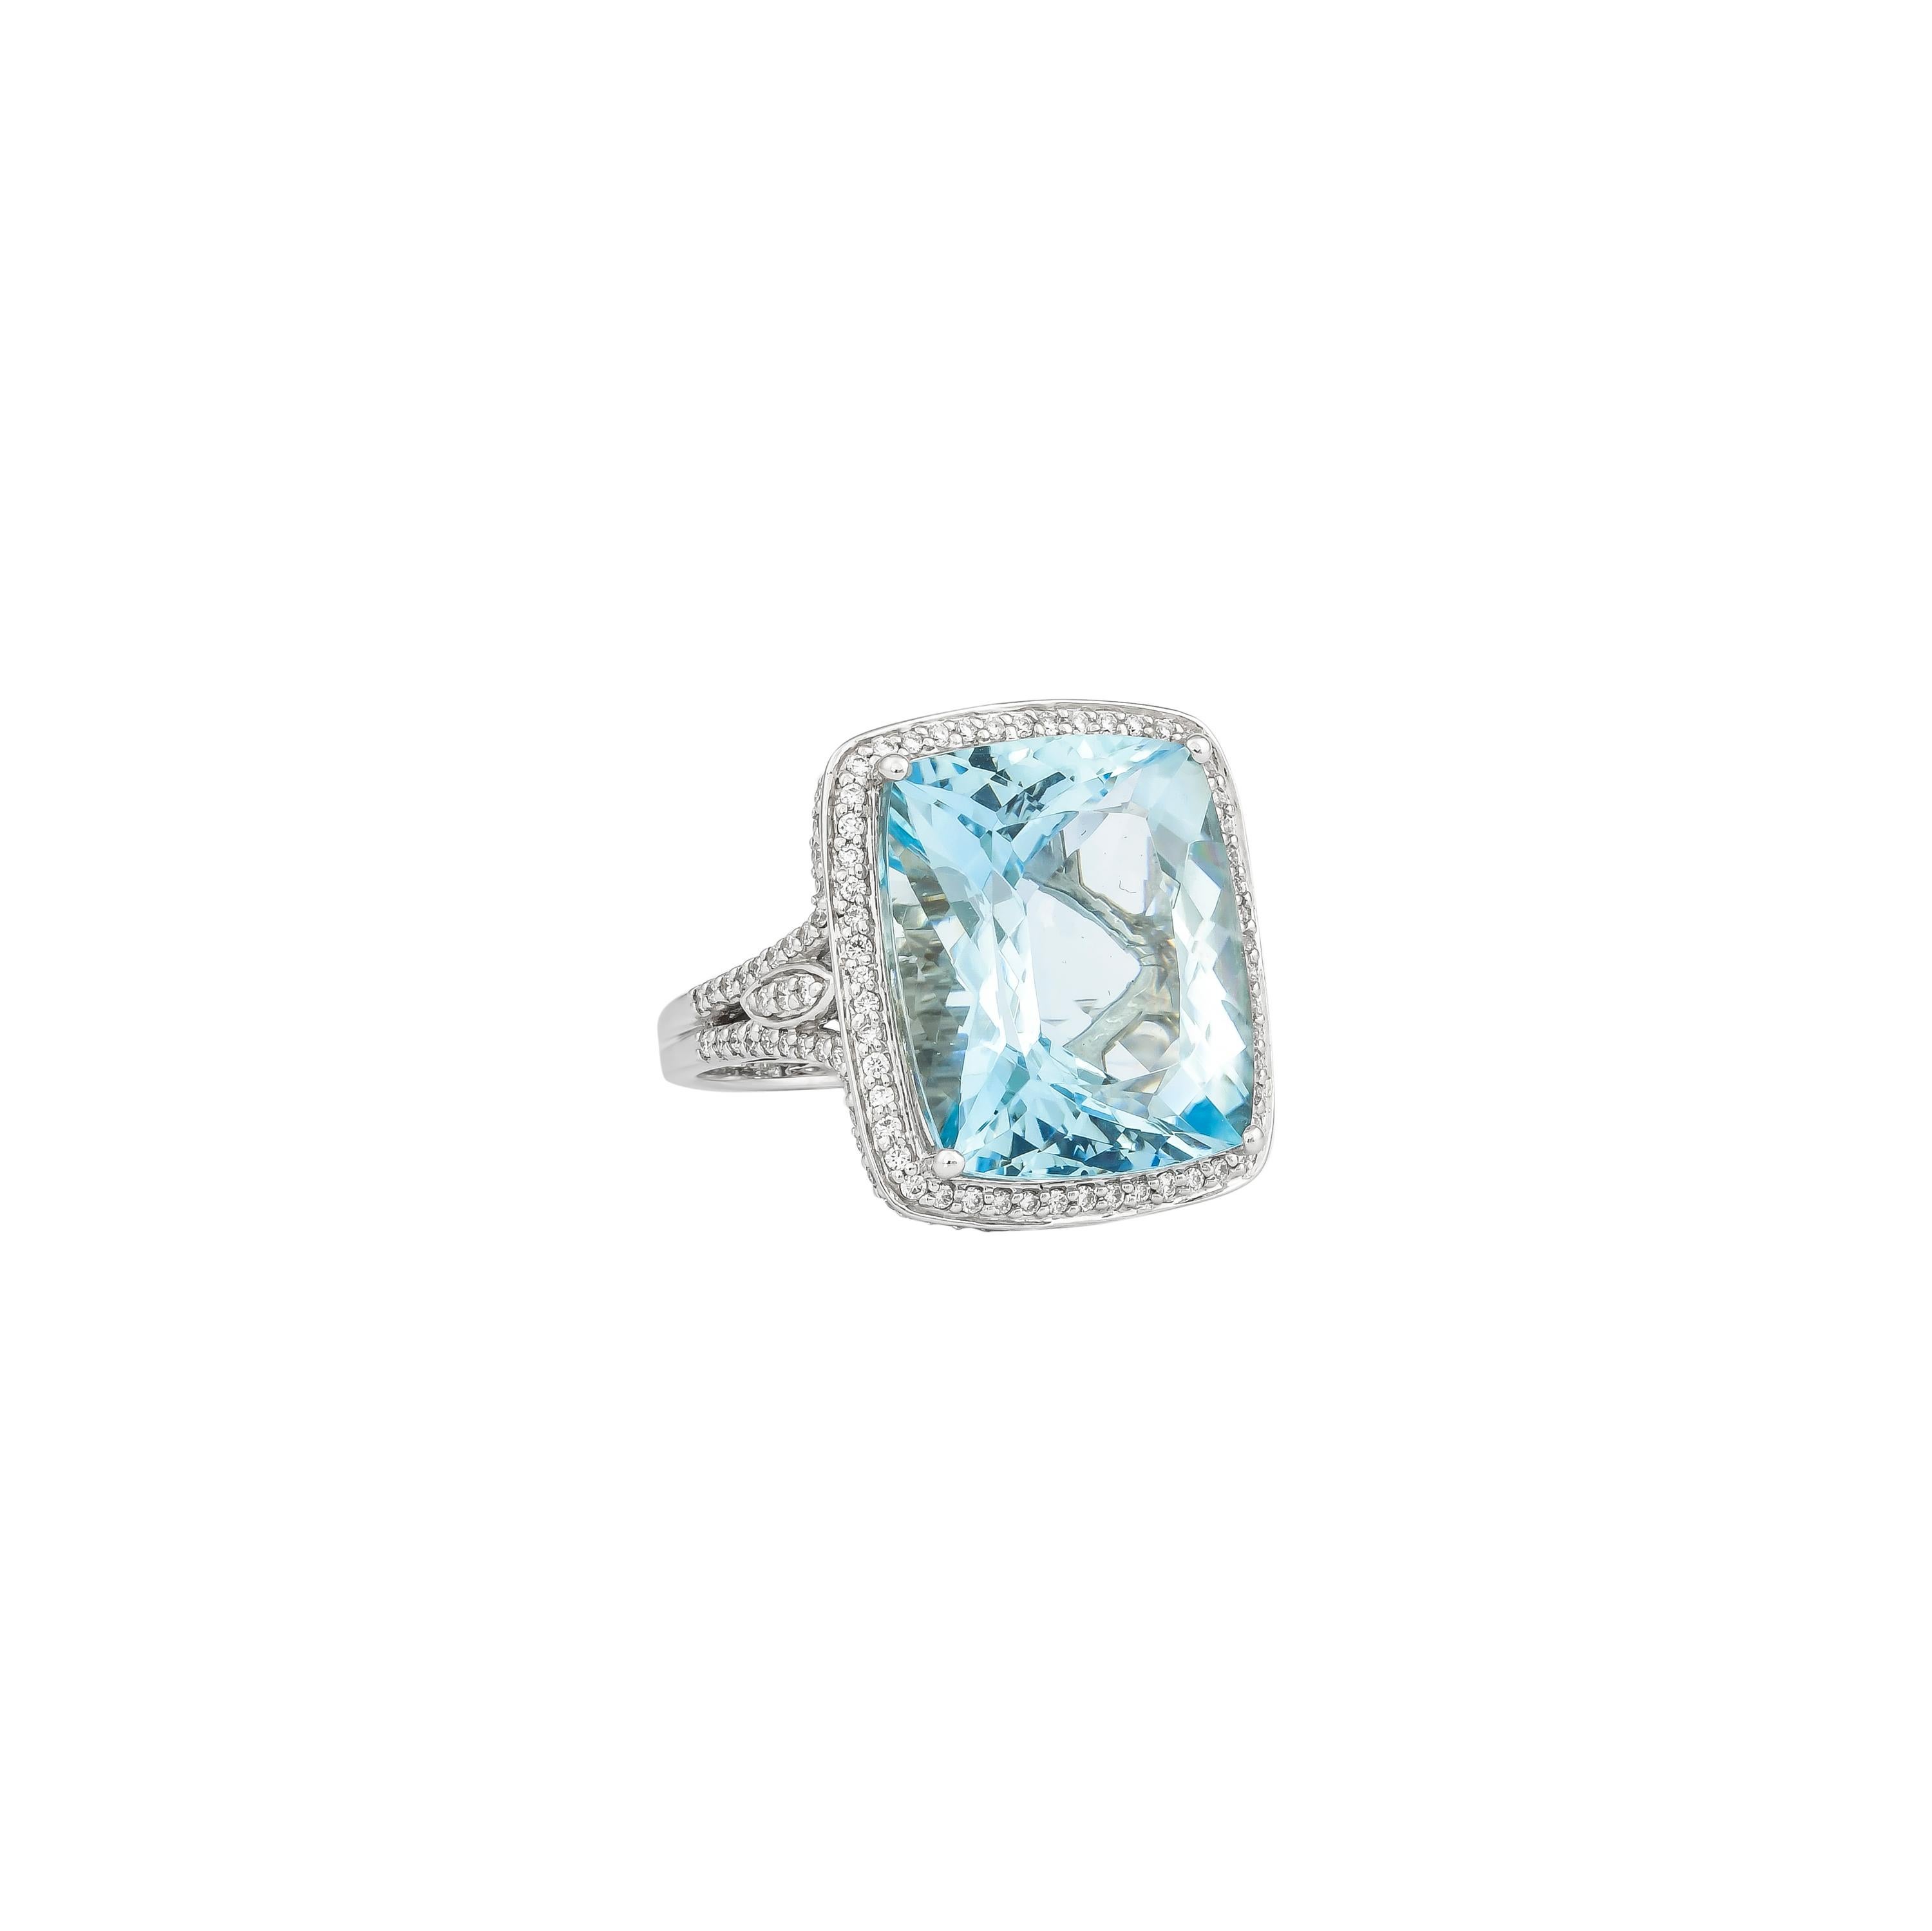 15.5 carat diamond ring